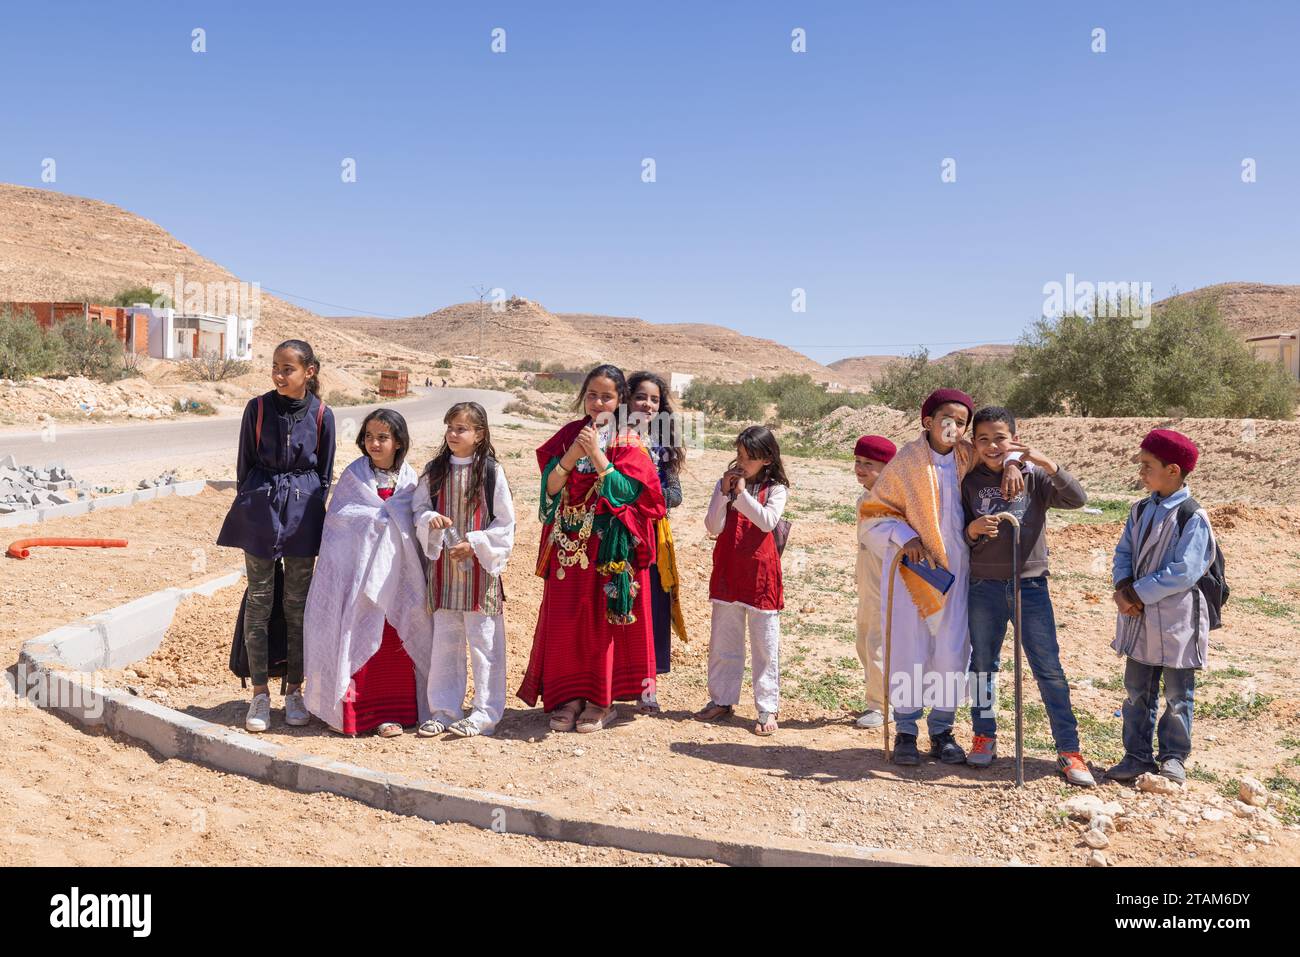 Tunisia. March 17, 2023. Children in traditional dress in the Tunisian desert. Stock Photo